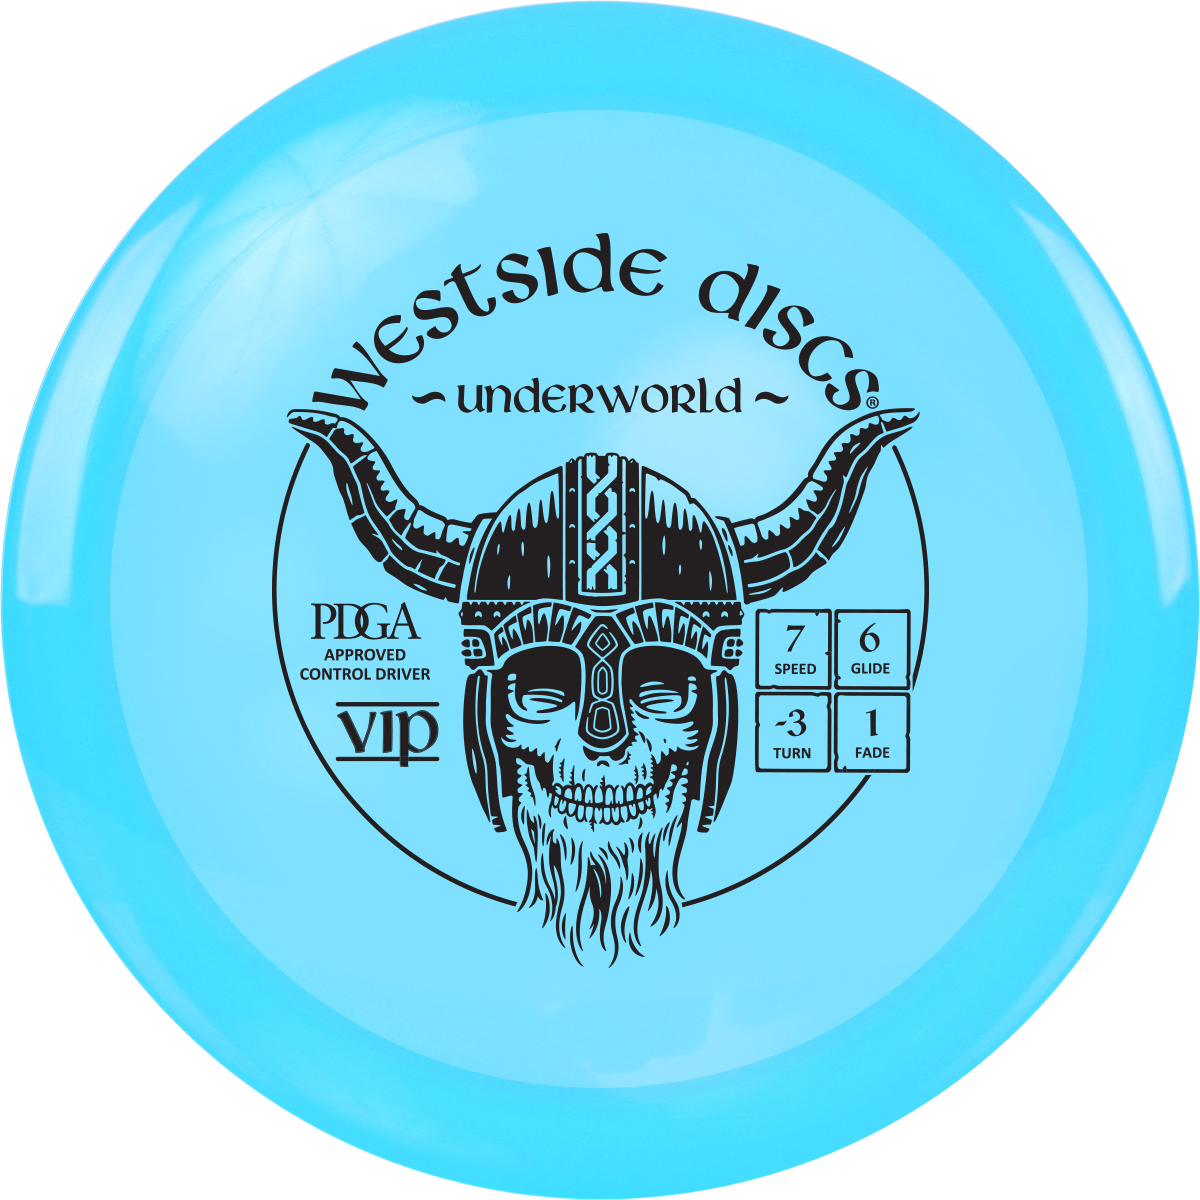 Westside Discs – VIP Underworld